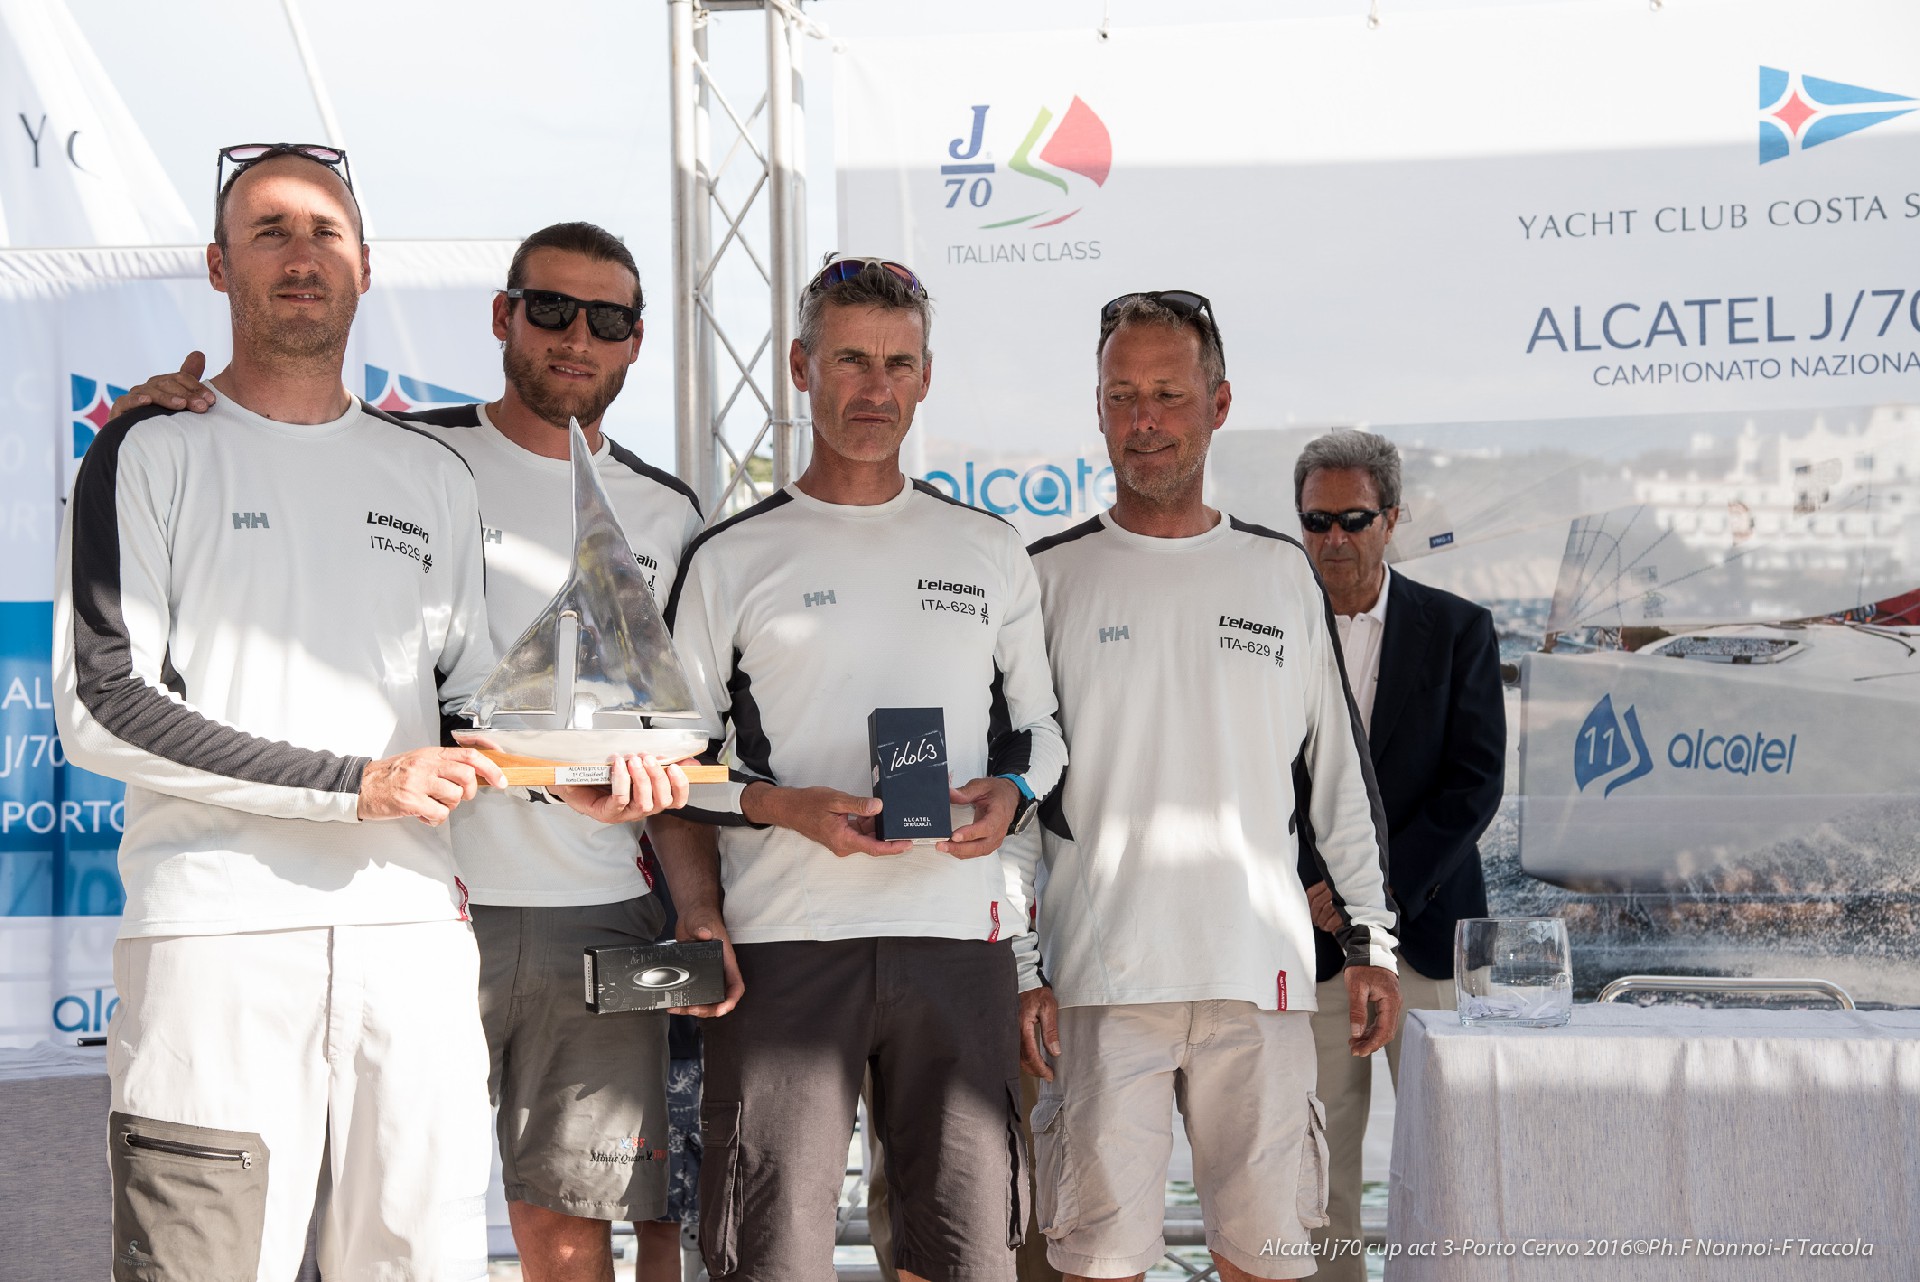 Alcatel J/70 Cup - L'elagain vince l'Alcatel J/70 Cup a Porto Cervo - News - Yacht Club Costa Smeralda